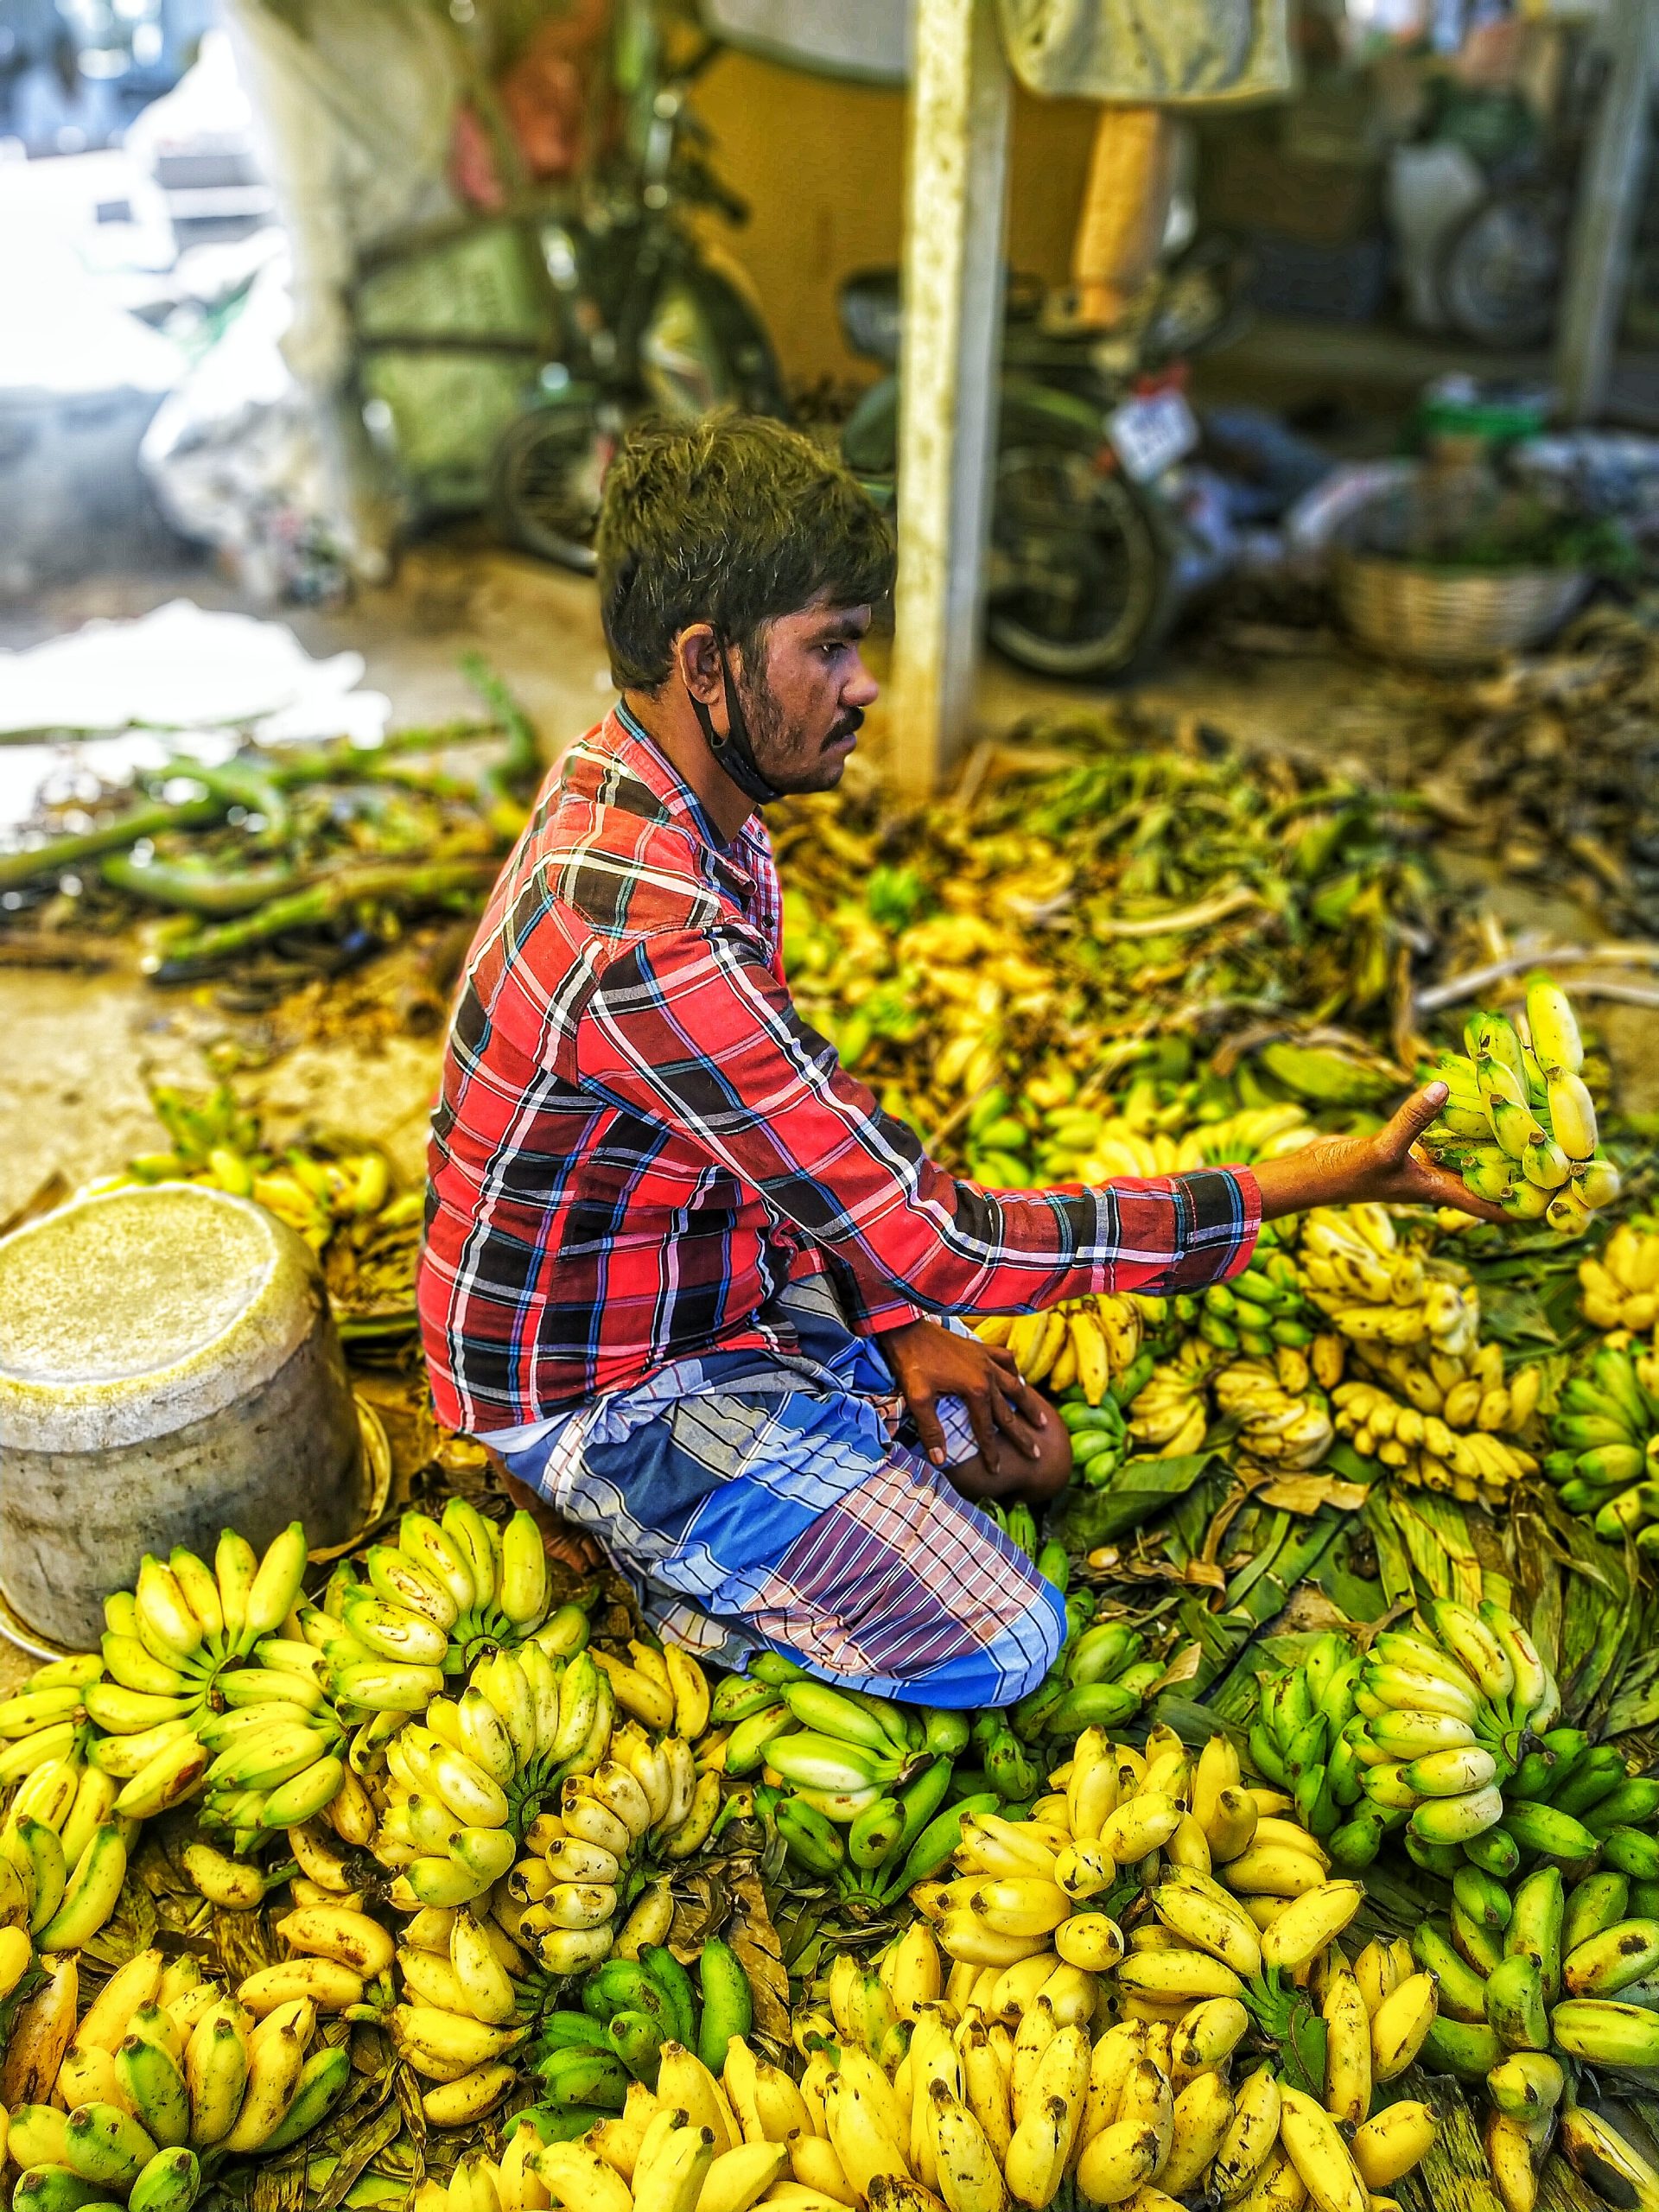 banana vendor